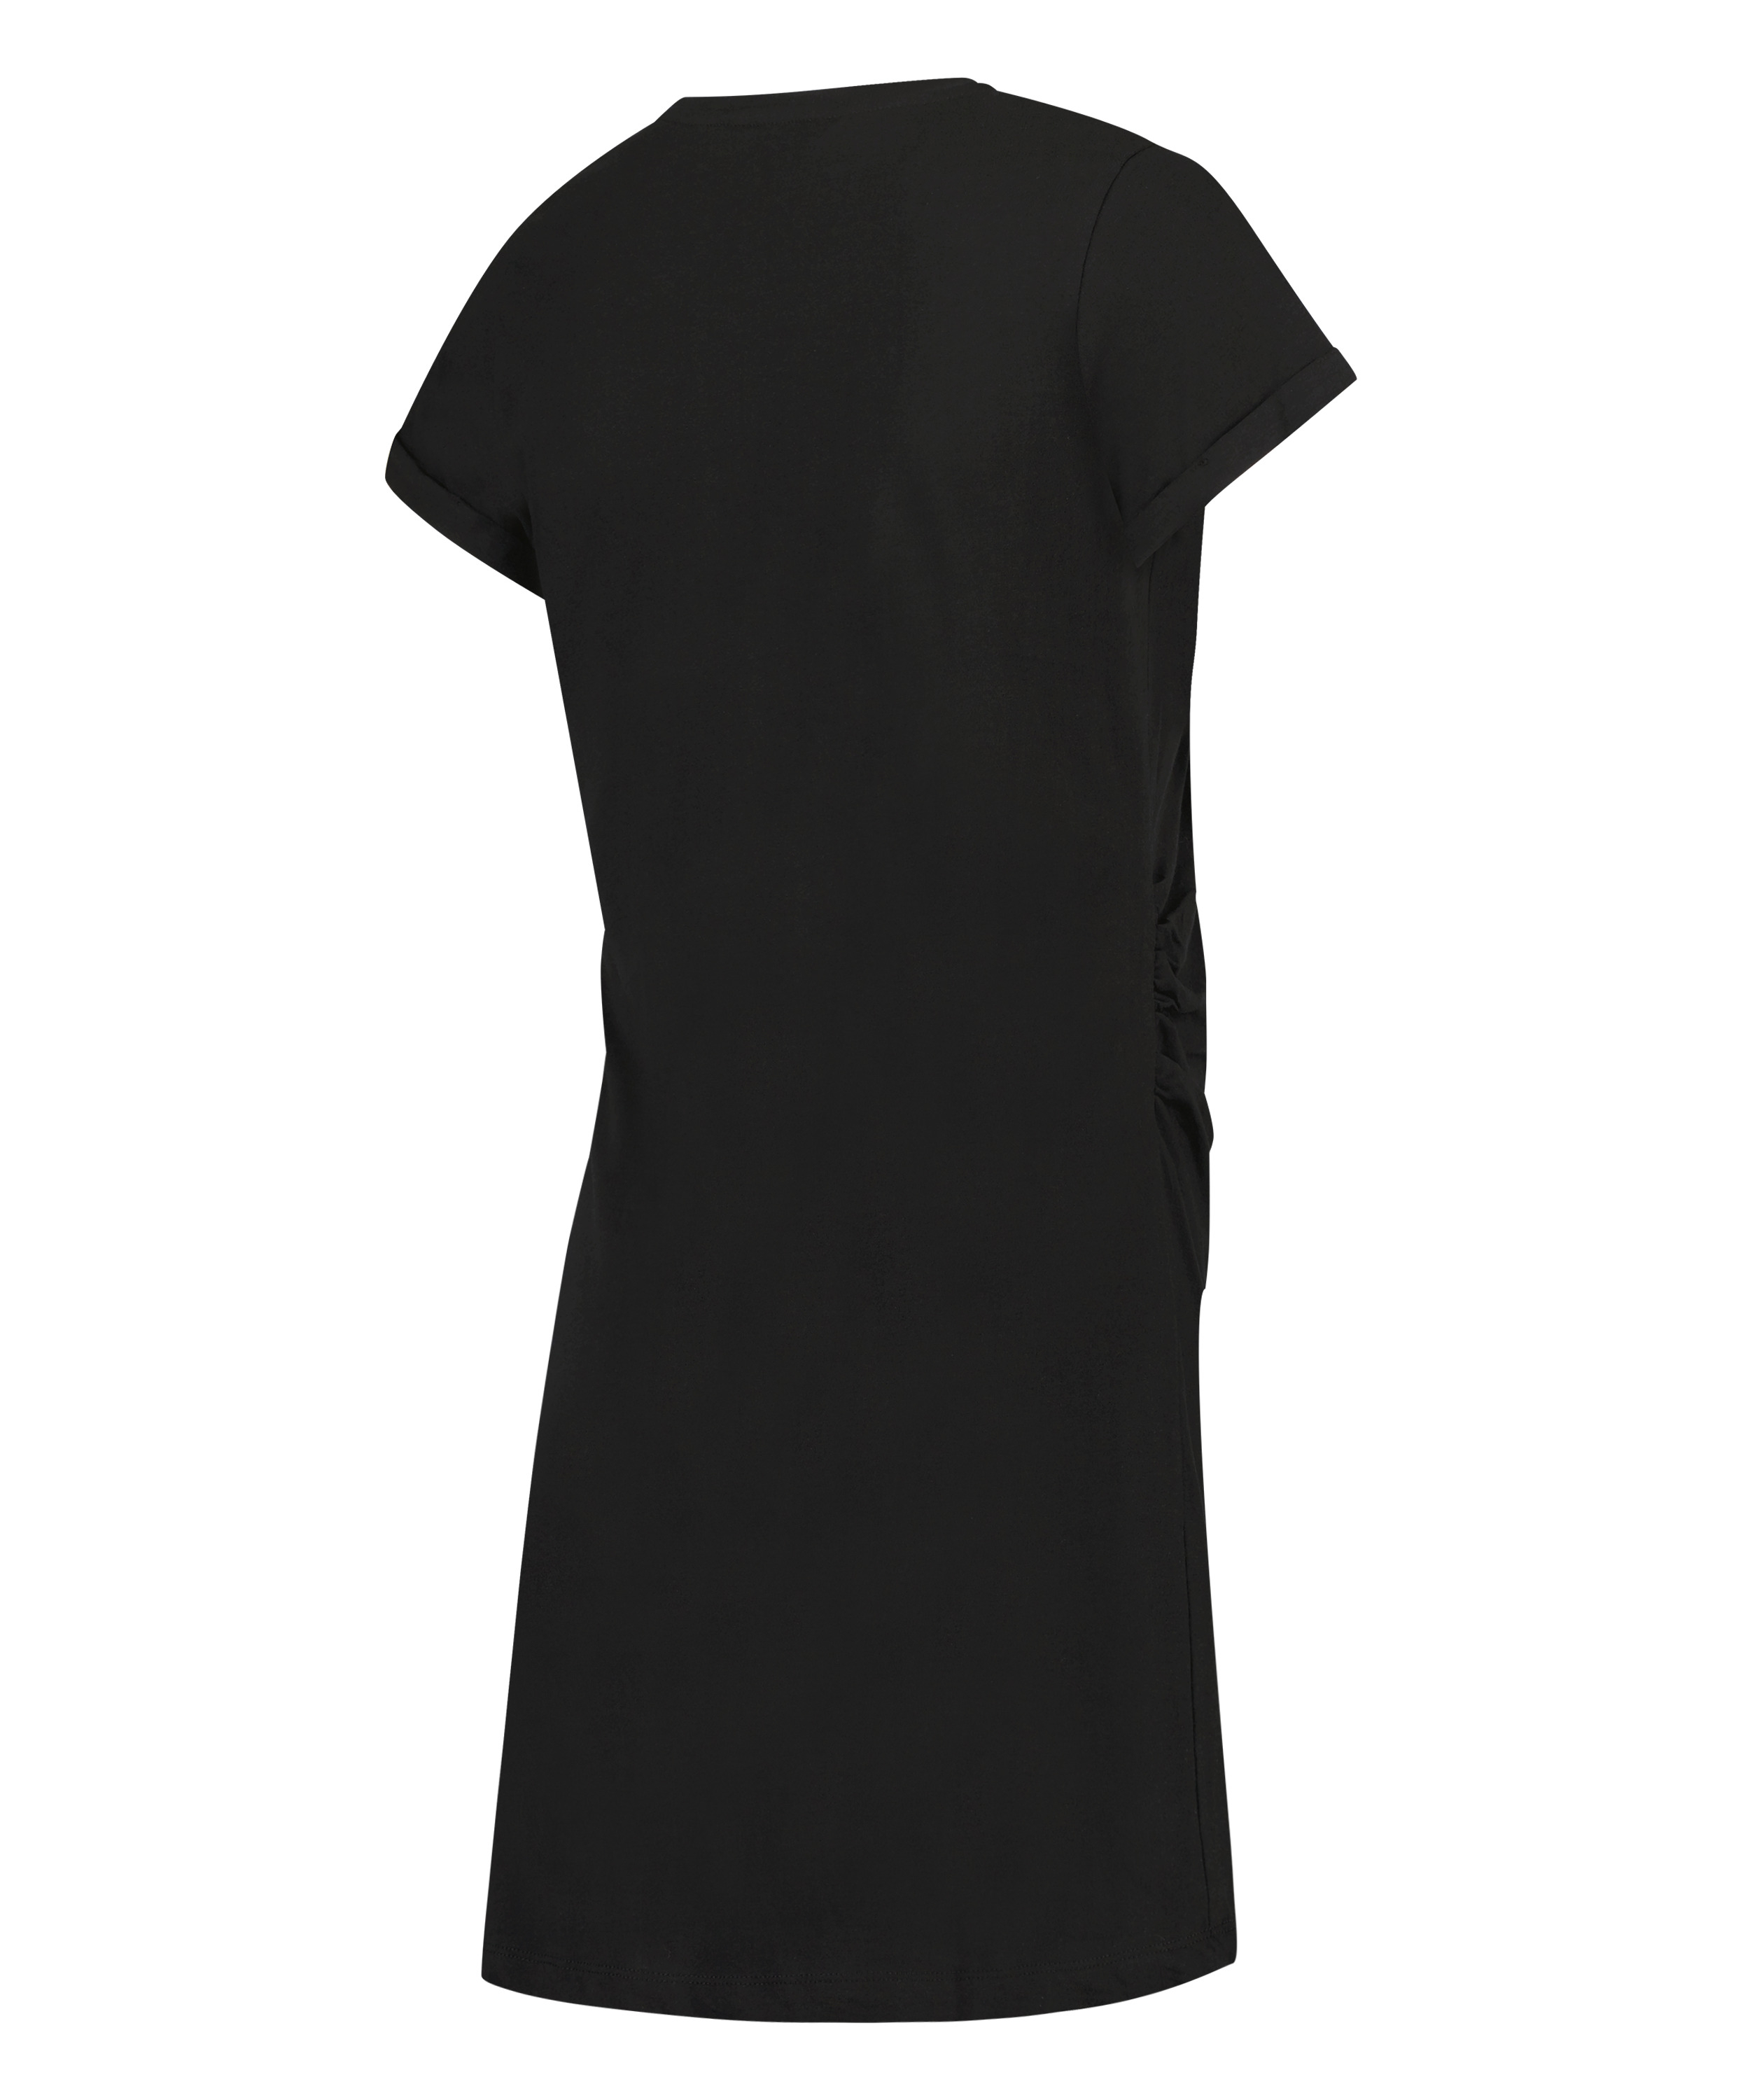 Short-Sleeved Maternity Nightshirt, Black, main